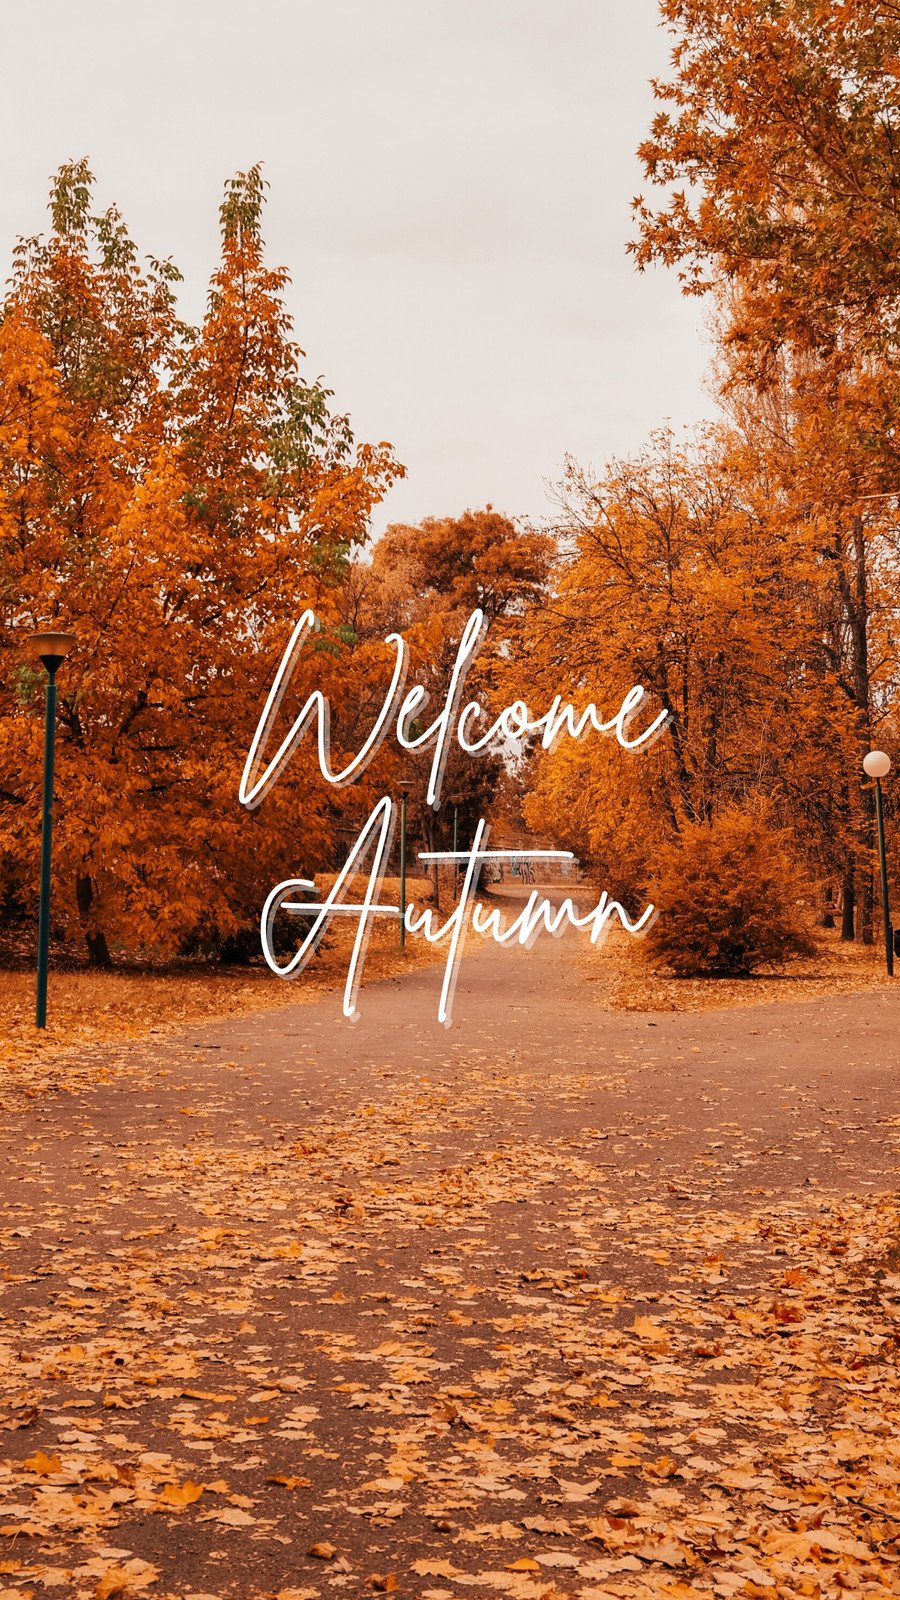 Autumn Wallpaper Images  Free Download on Freepik